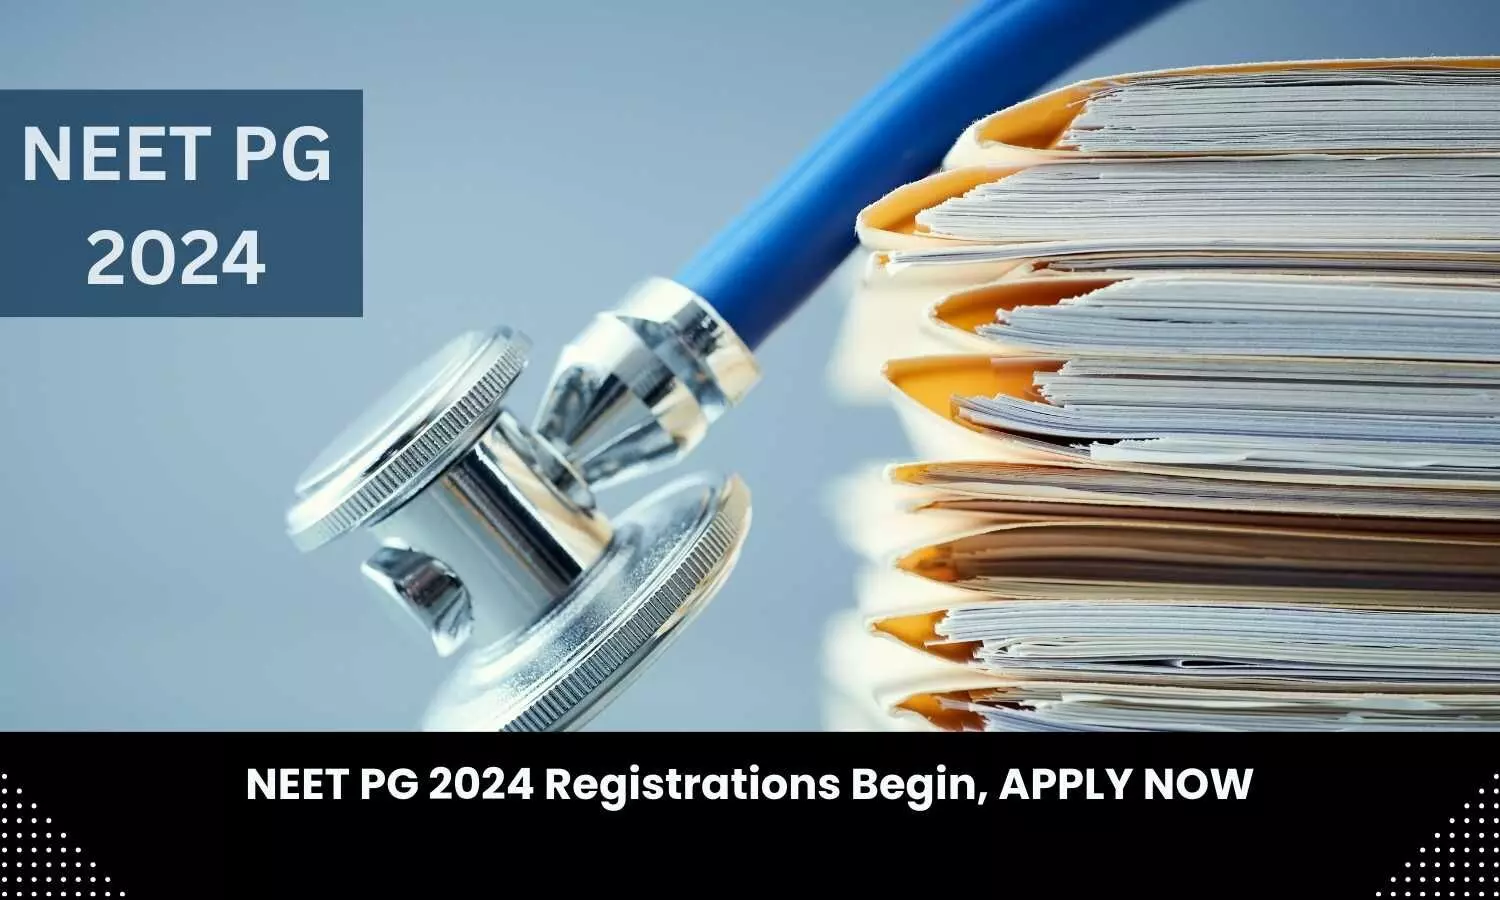 Registrations for NEET PG 2024 starts